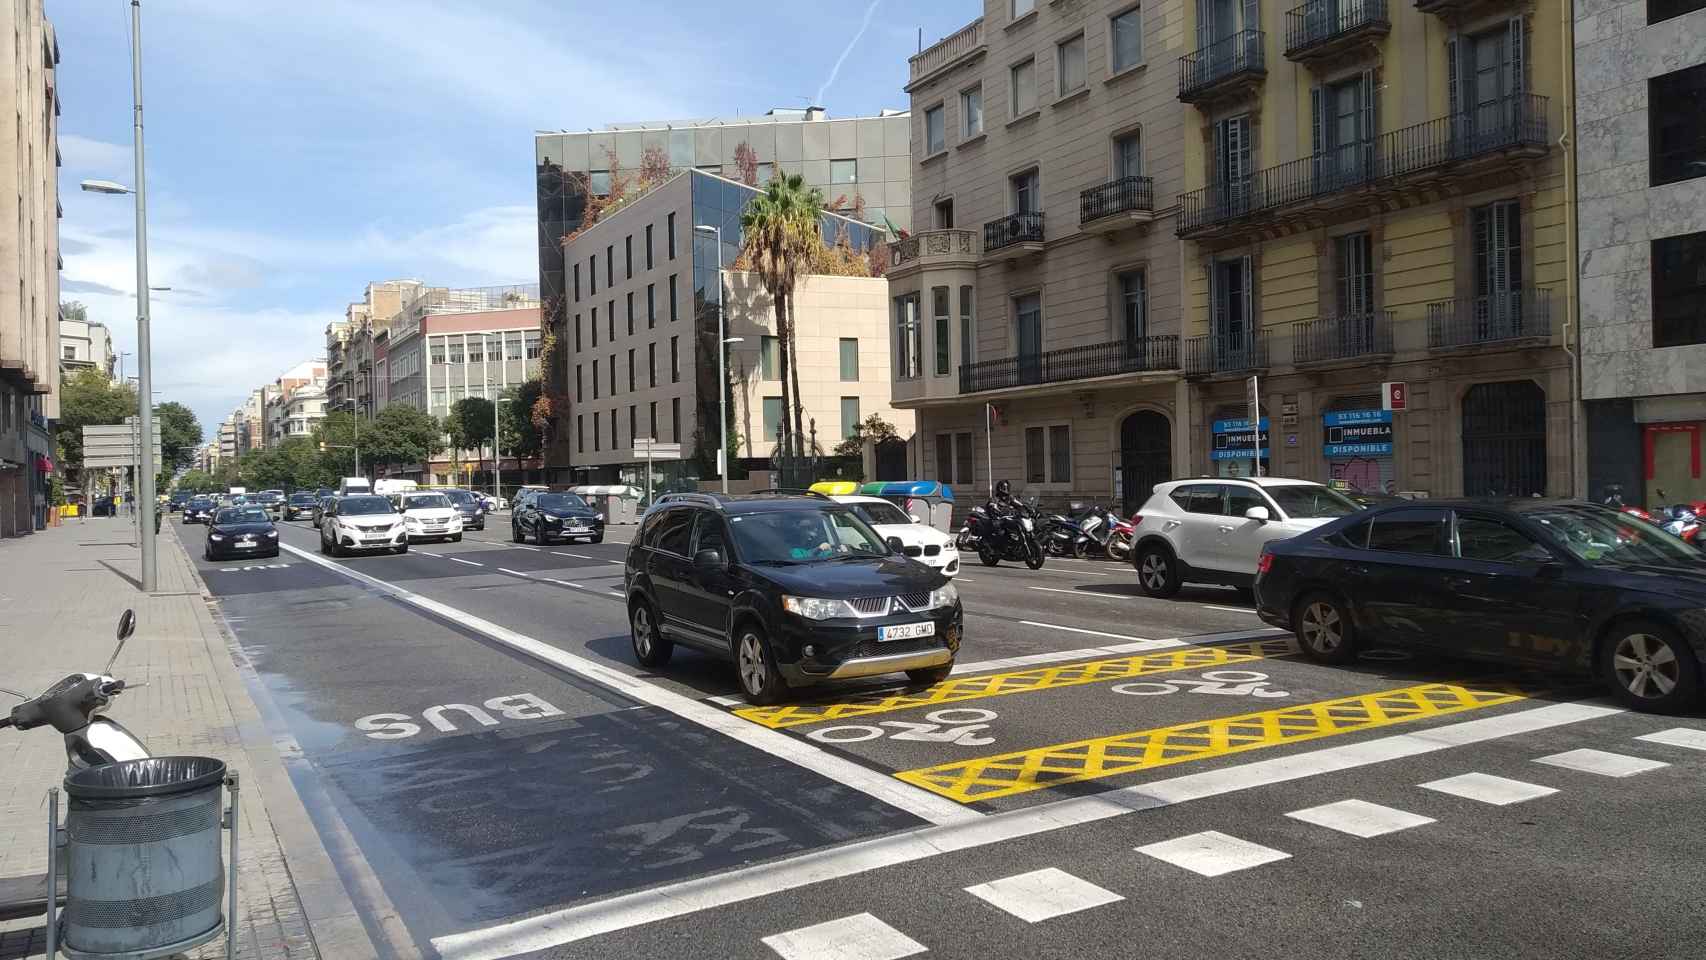 Carril bus de la calle de Aragó de Barcelona / METRÓPOLI - JORDI SUBIRANA